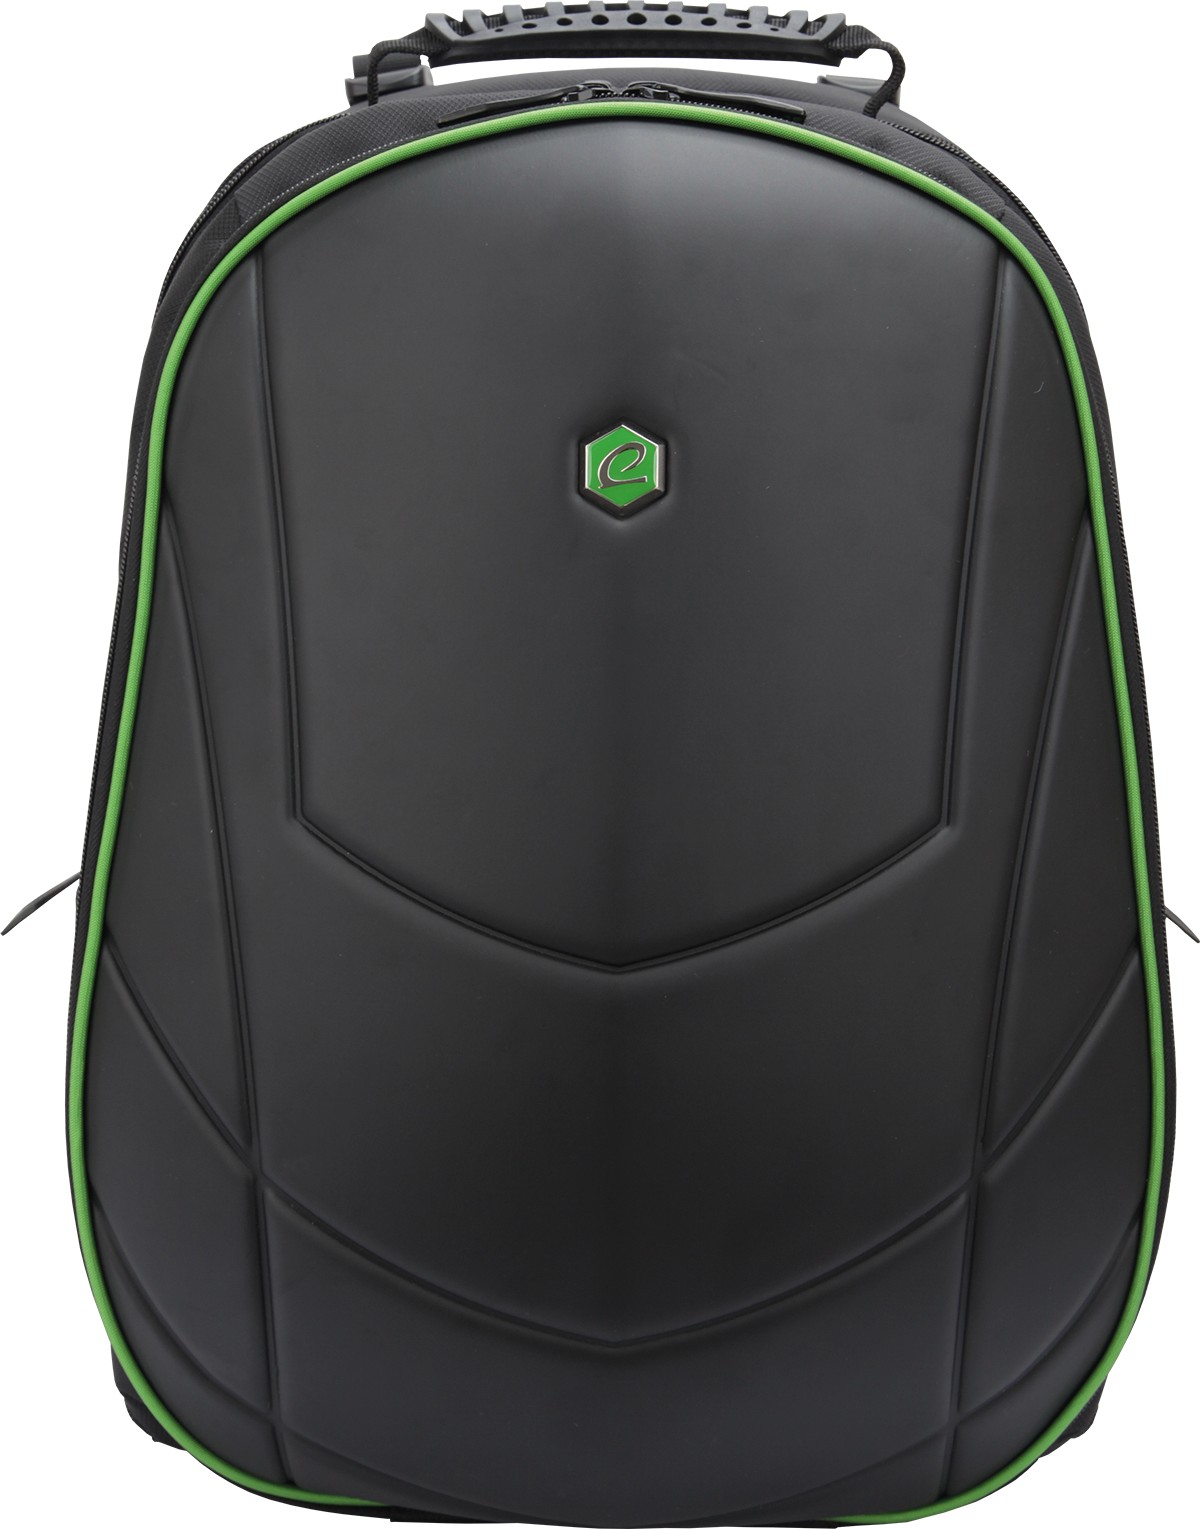 Rucsac BESTLIFE Gaming Assailant - negru/verde - laptop 17 inch, compartiment anti-vibratie, charge pentru USB